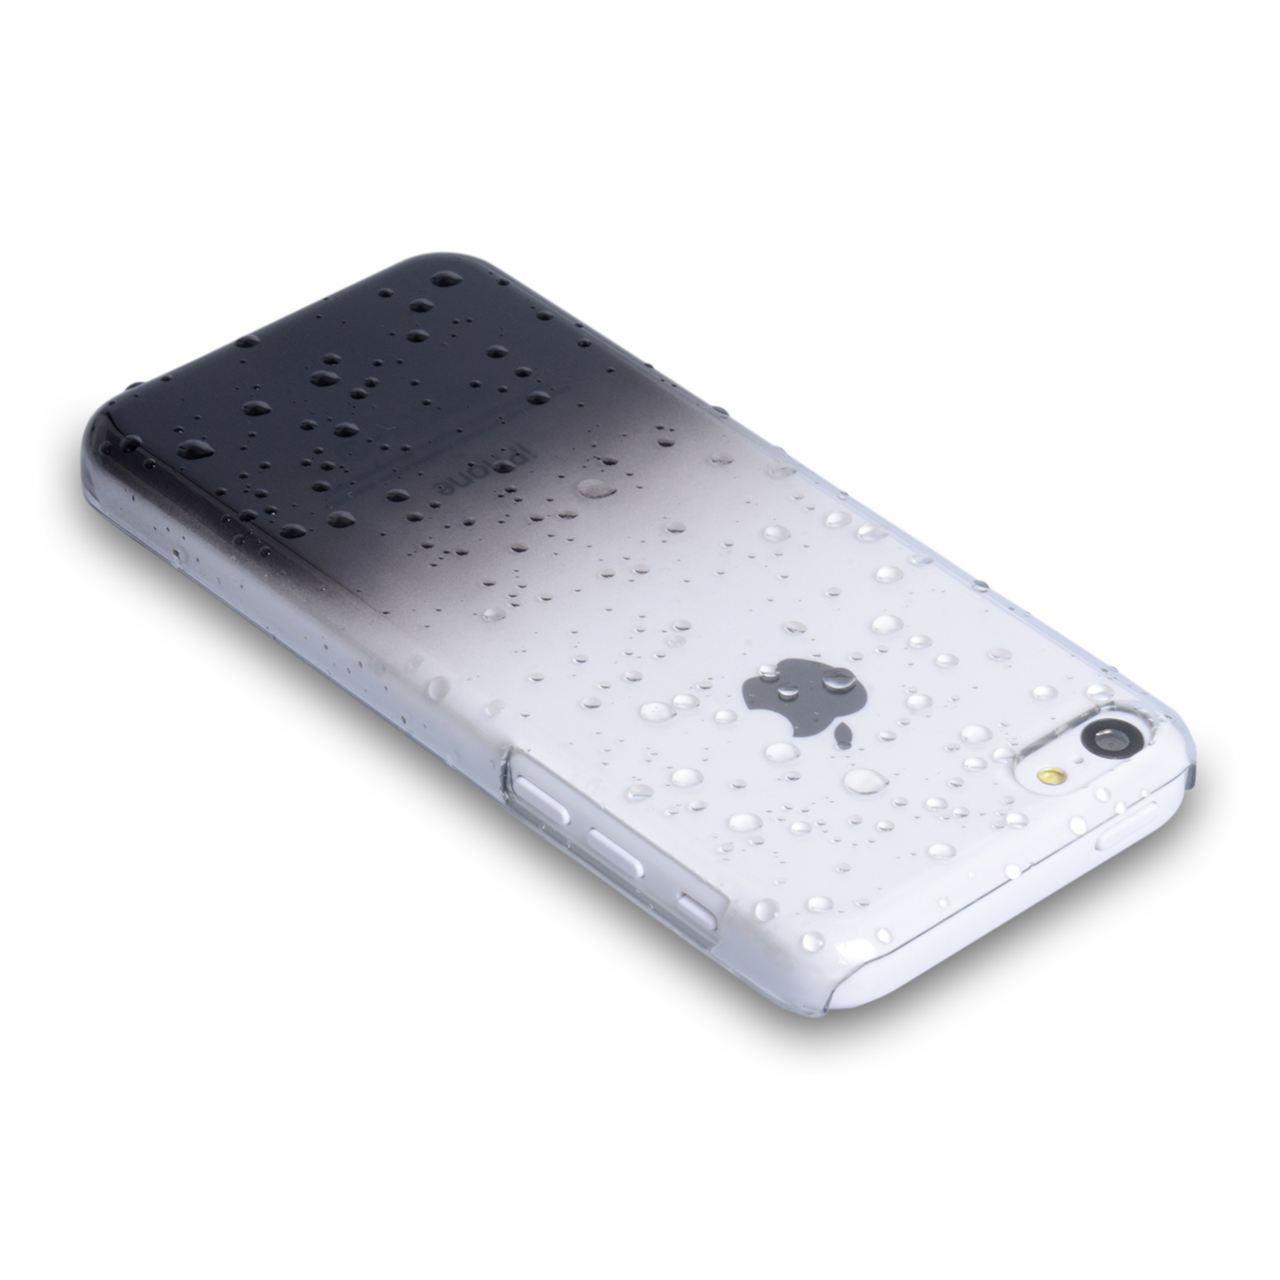 YouSave Accessories iPhone 5C Raindrop Hard Case - Black